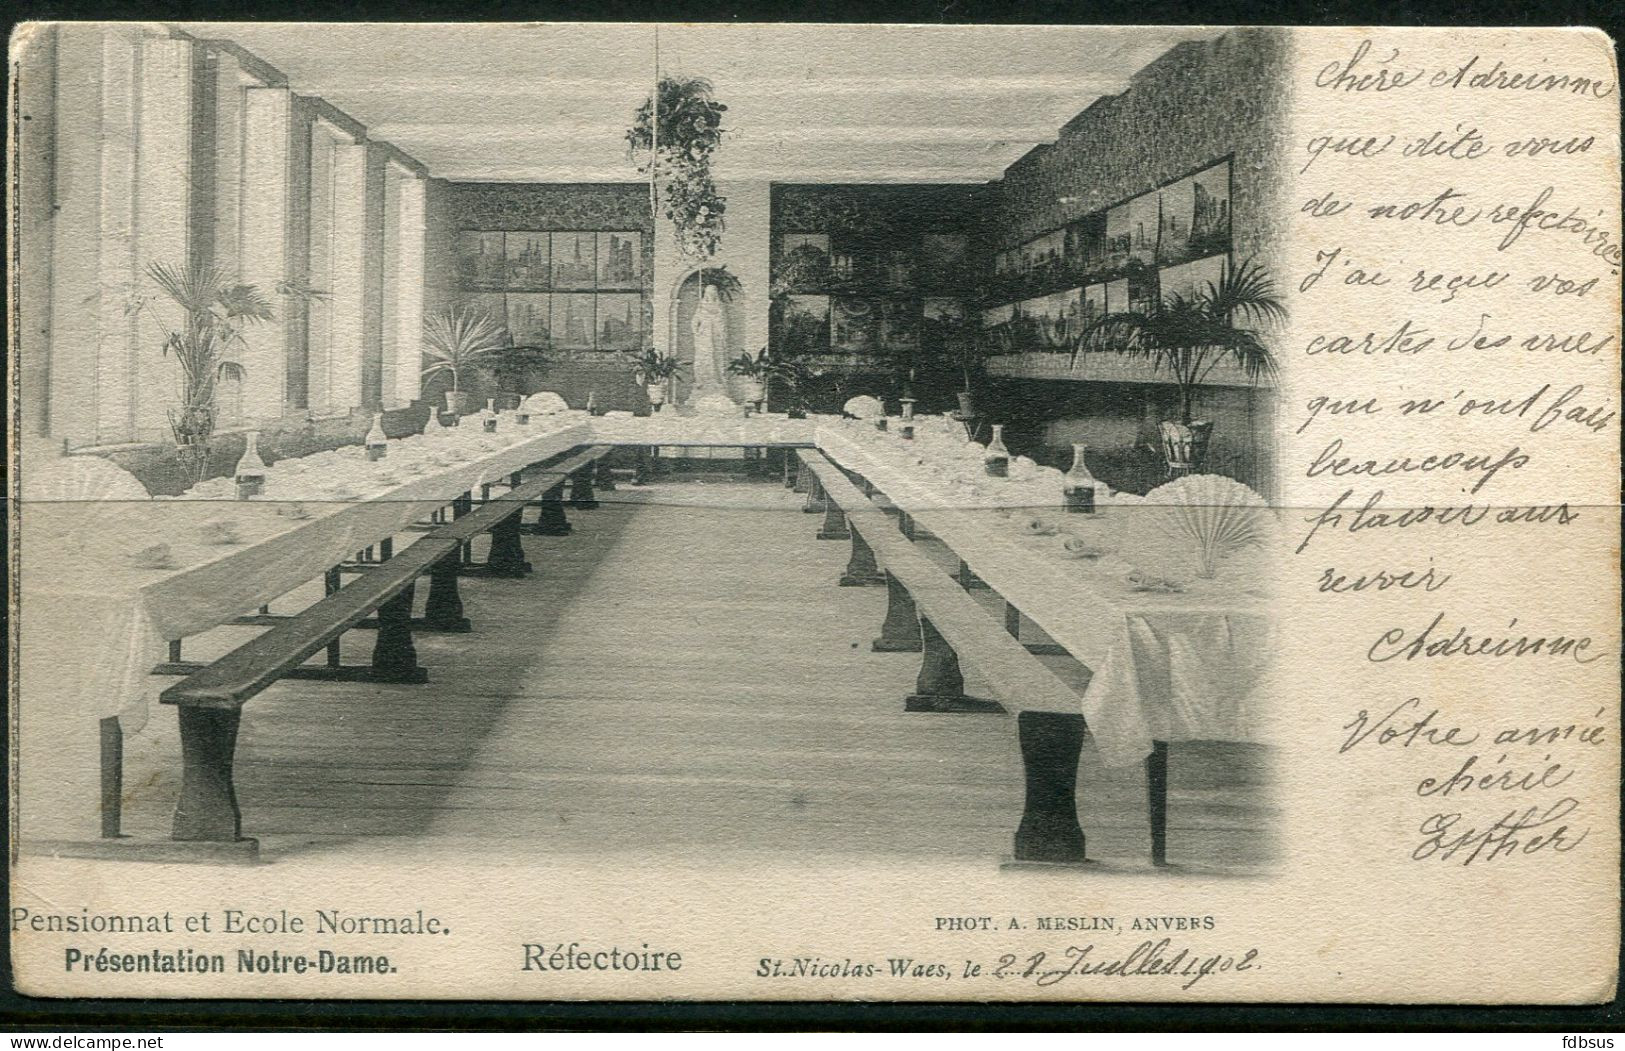 SINT NIKLAAS 1902 - Normaalschool OLV Presentatie - Eetzaal - Photo A Meslin - Stempels St NICOLAS En LEBBEKE - Sint-Niklaas